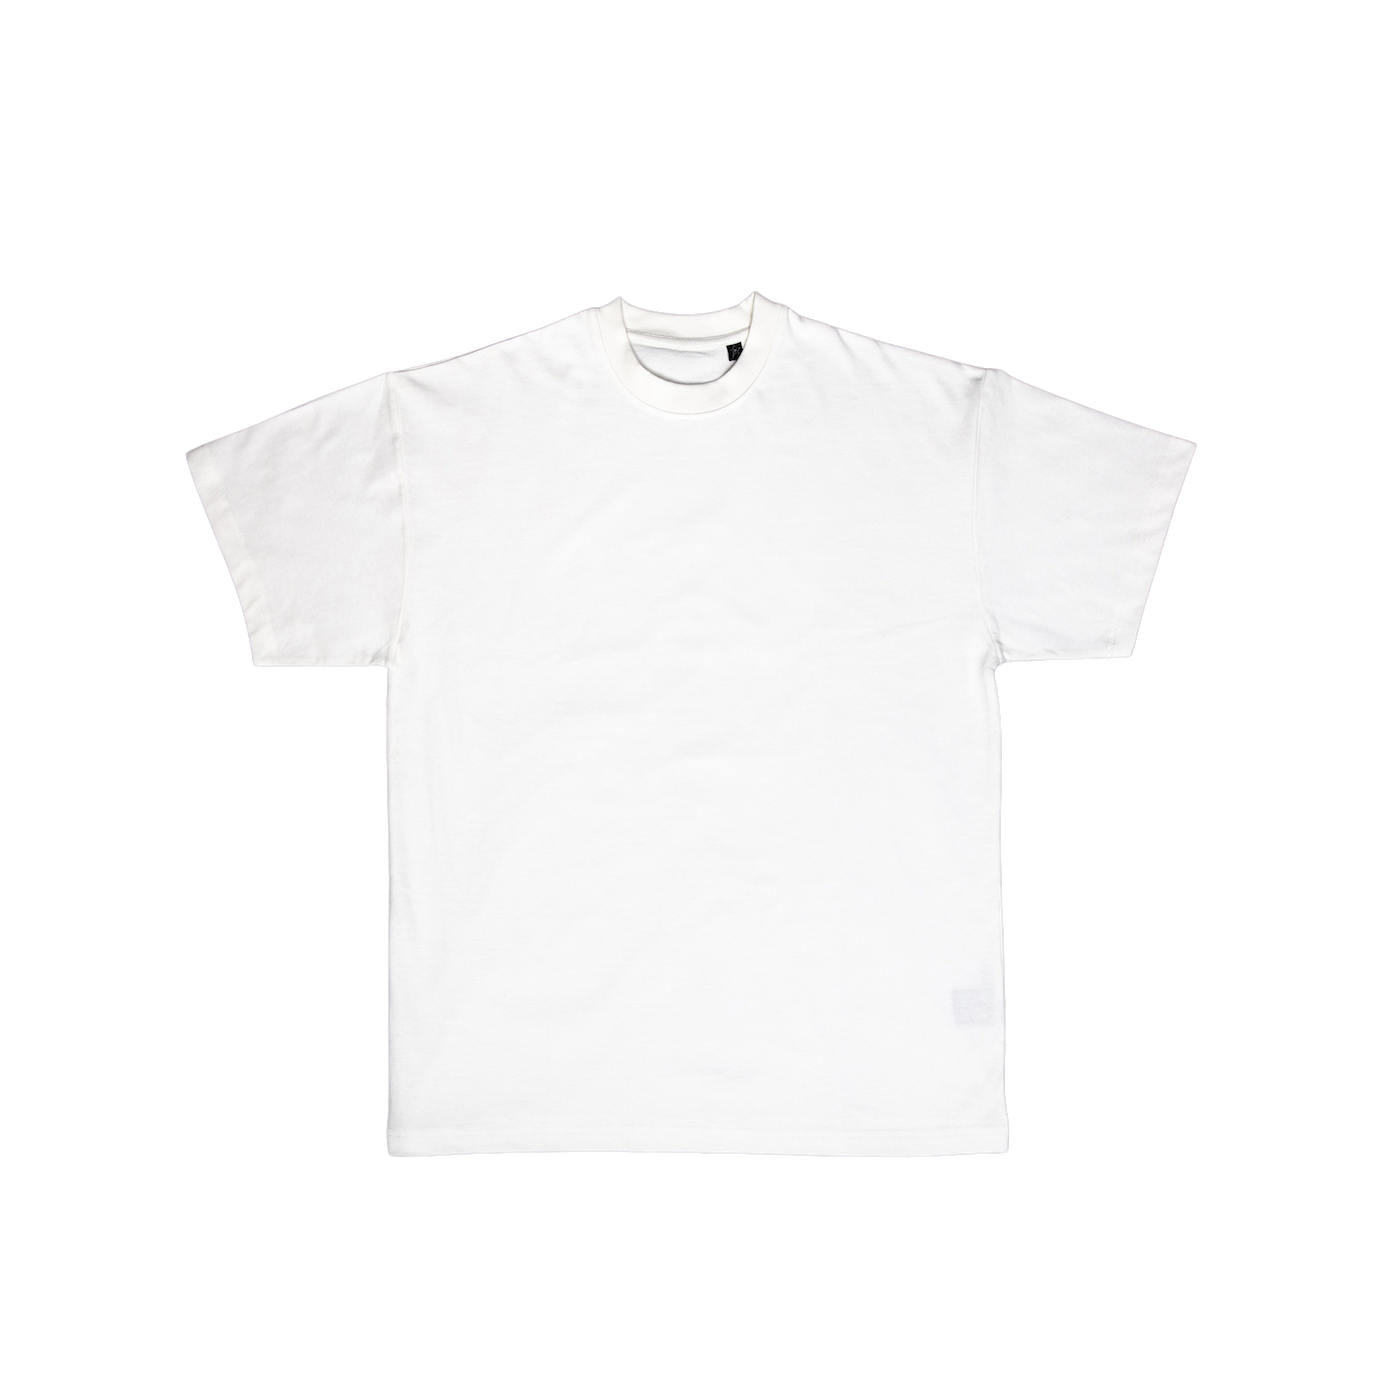 Calabasas Supply - Luxury Blank T-Shirts - LA, California – calabasassupply